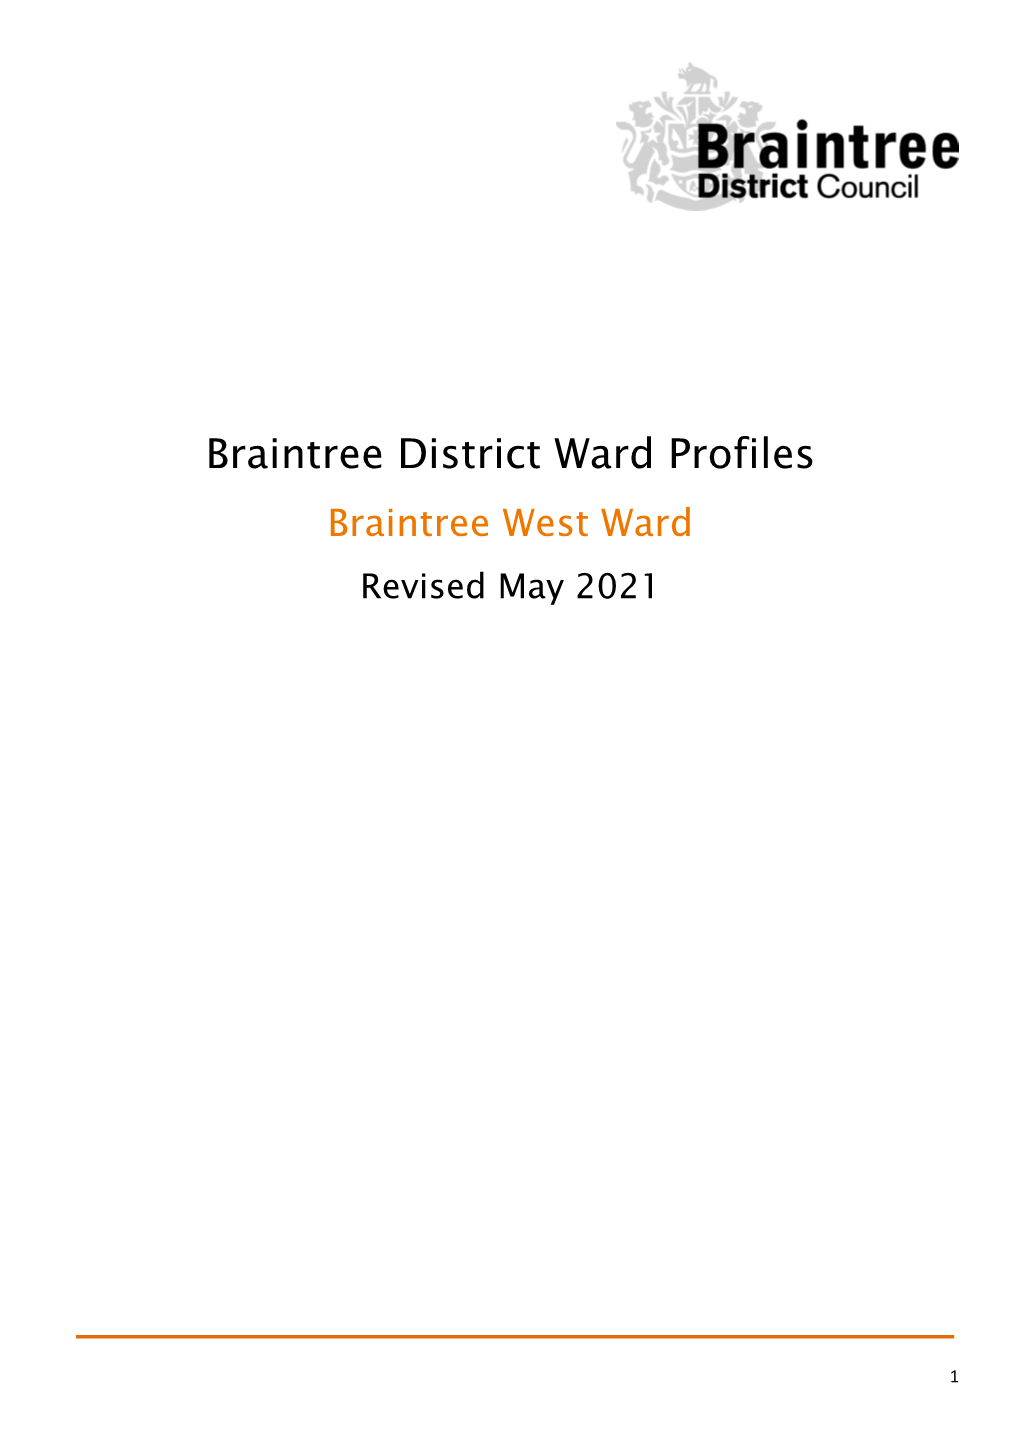 Braintree District Ward Profiles Braintree West Ward Revised May 2021